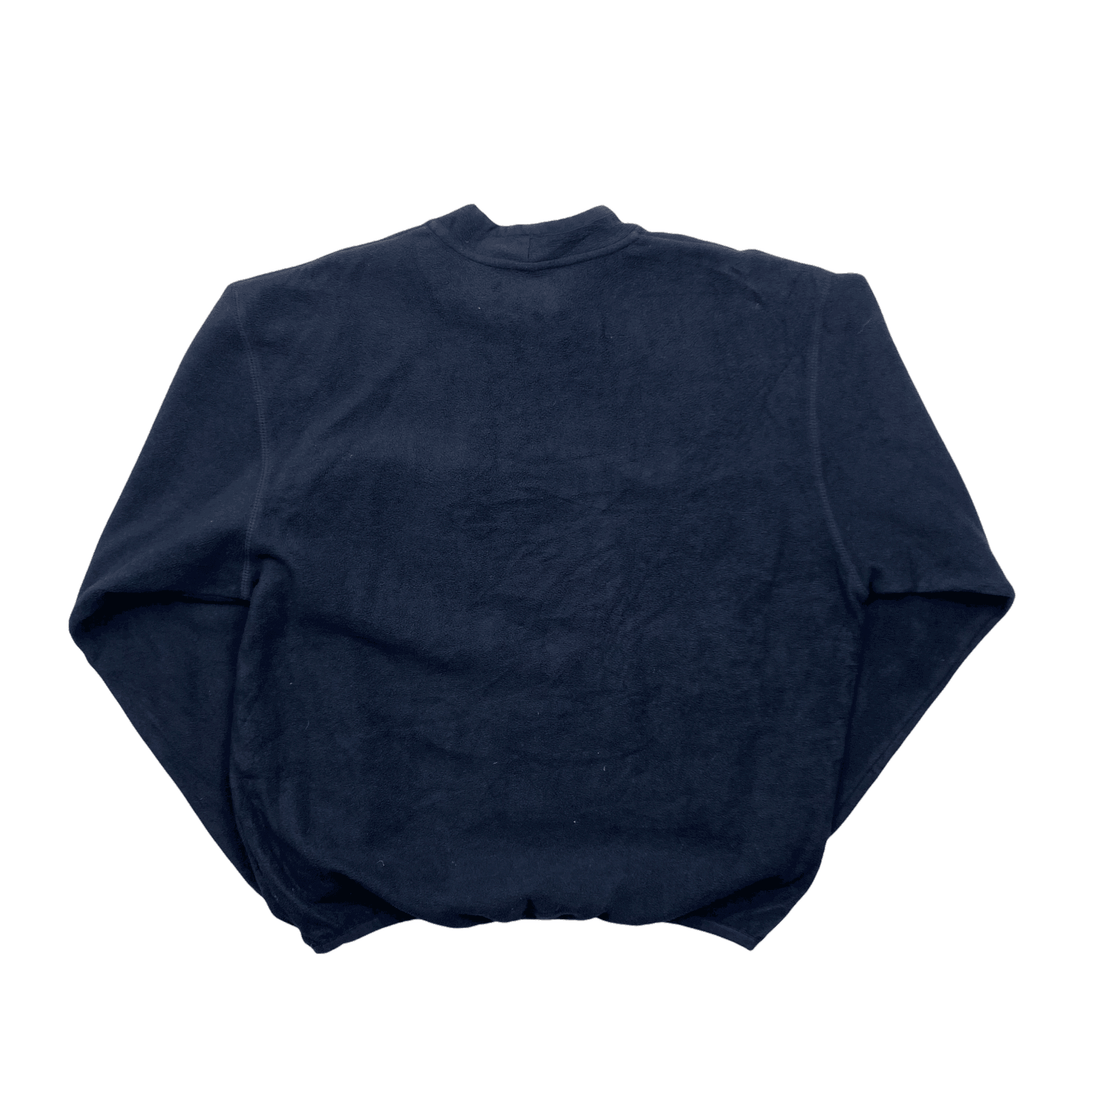 Vintage 90s Navy Blue Nike Centre Swoosh Fleece Sweatshirt - Medium - The Streetwear Studio